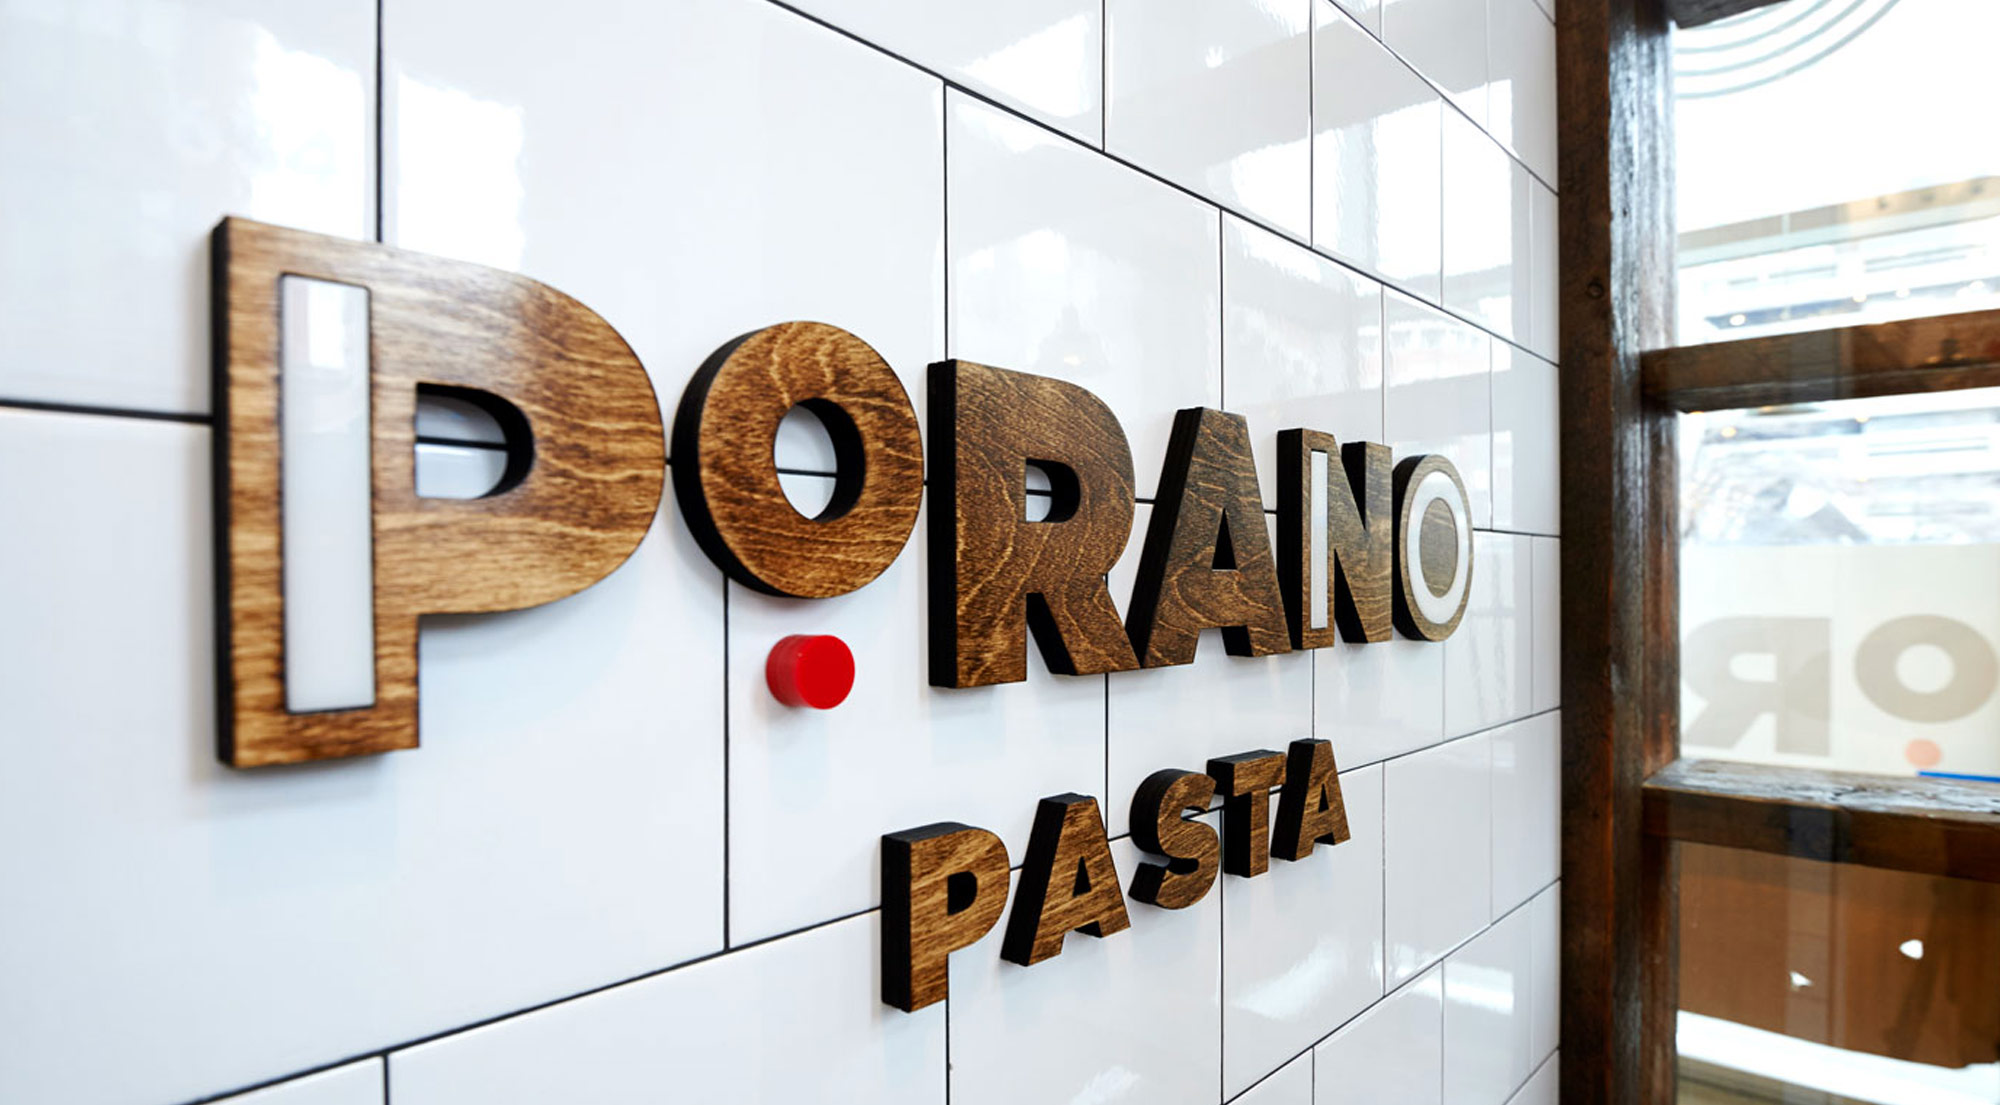 Porano Pasta Restaurant Branding